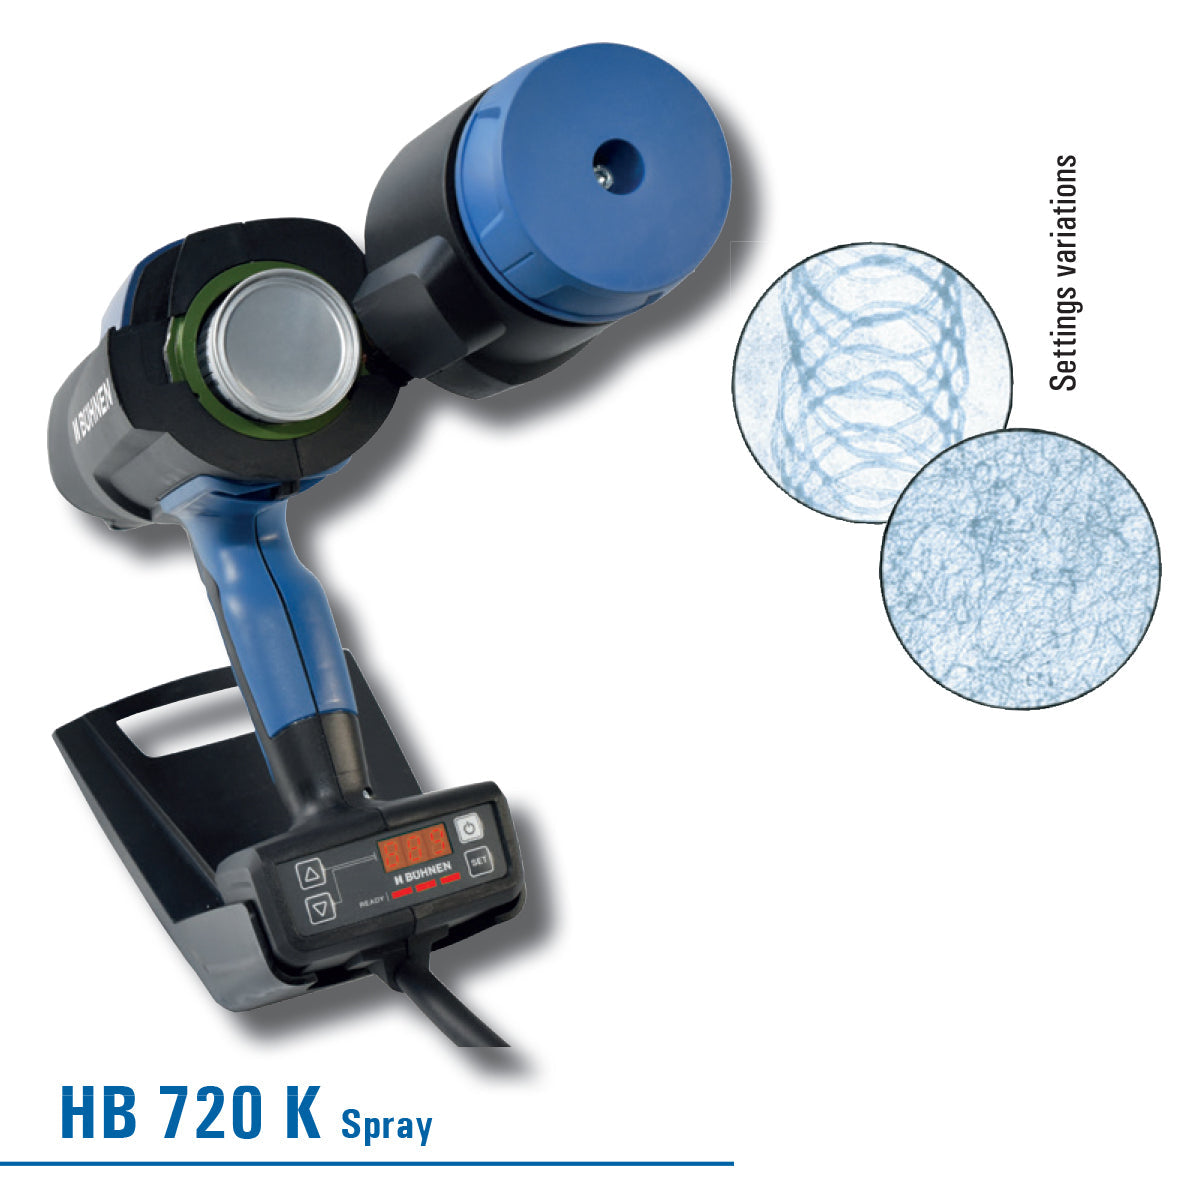 HB 720 K Pneumatic Cartridge Spray tool